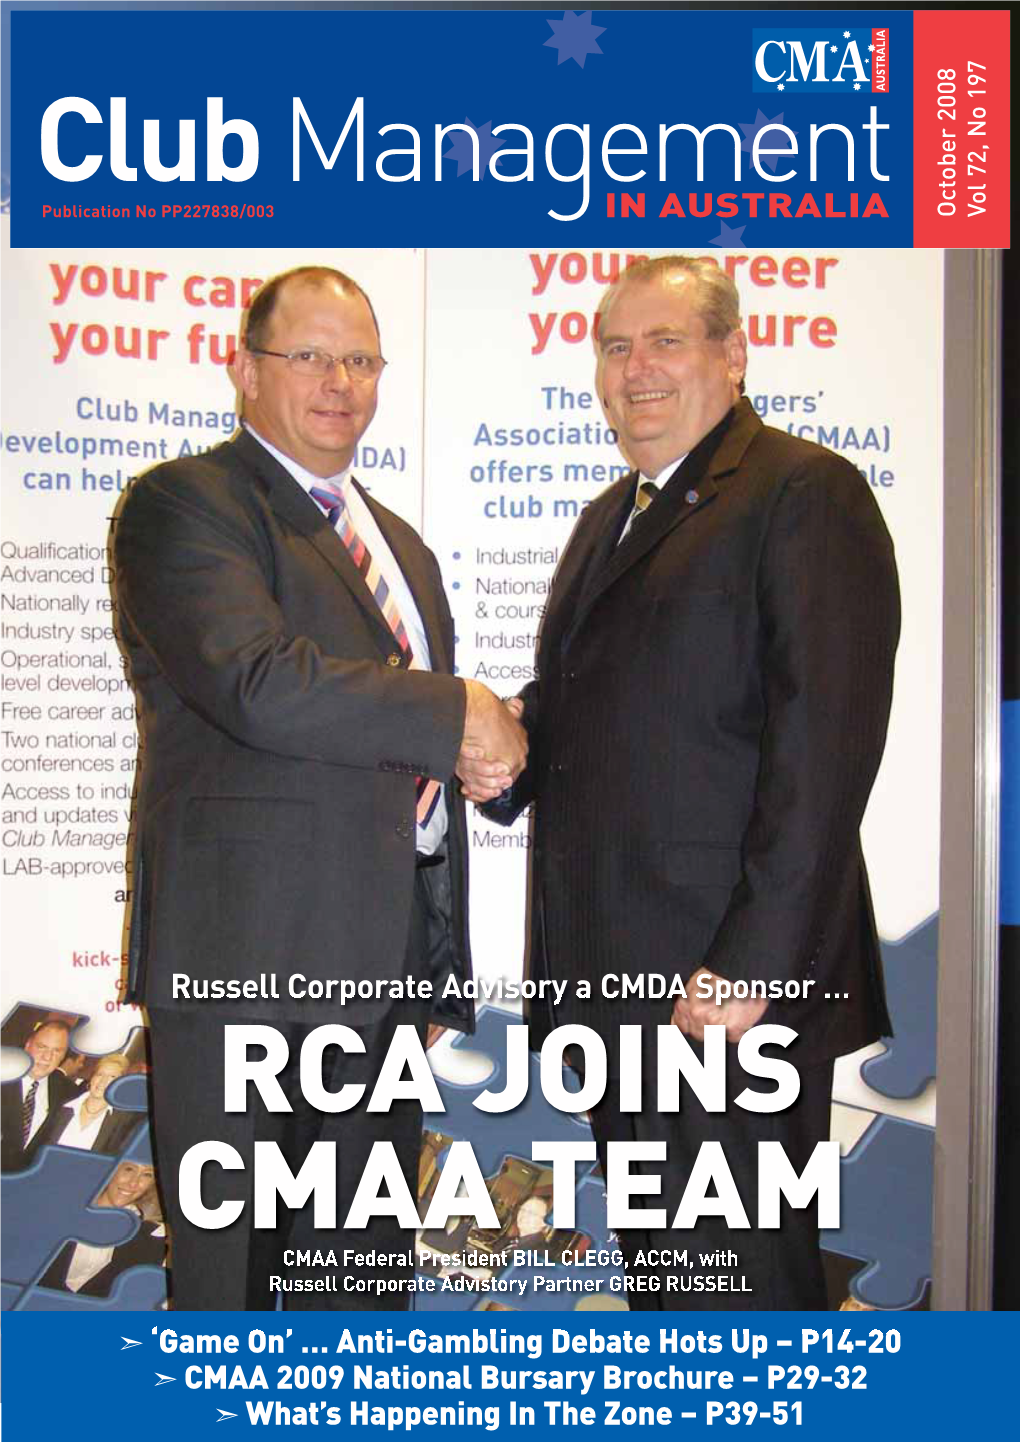 Russell Corporate Advisory a CMDA Sponsor …